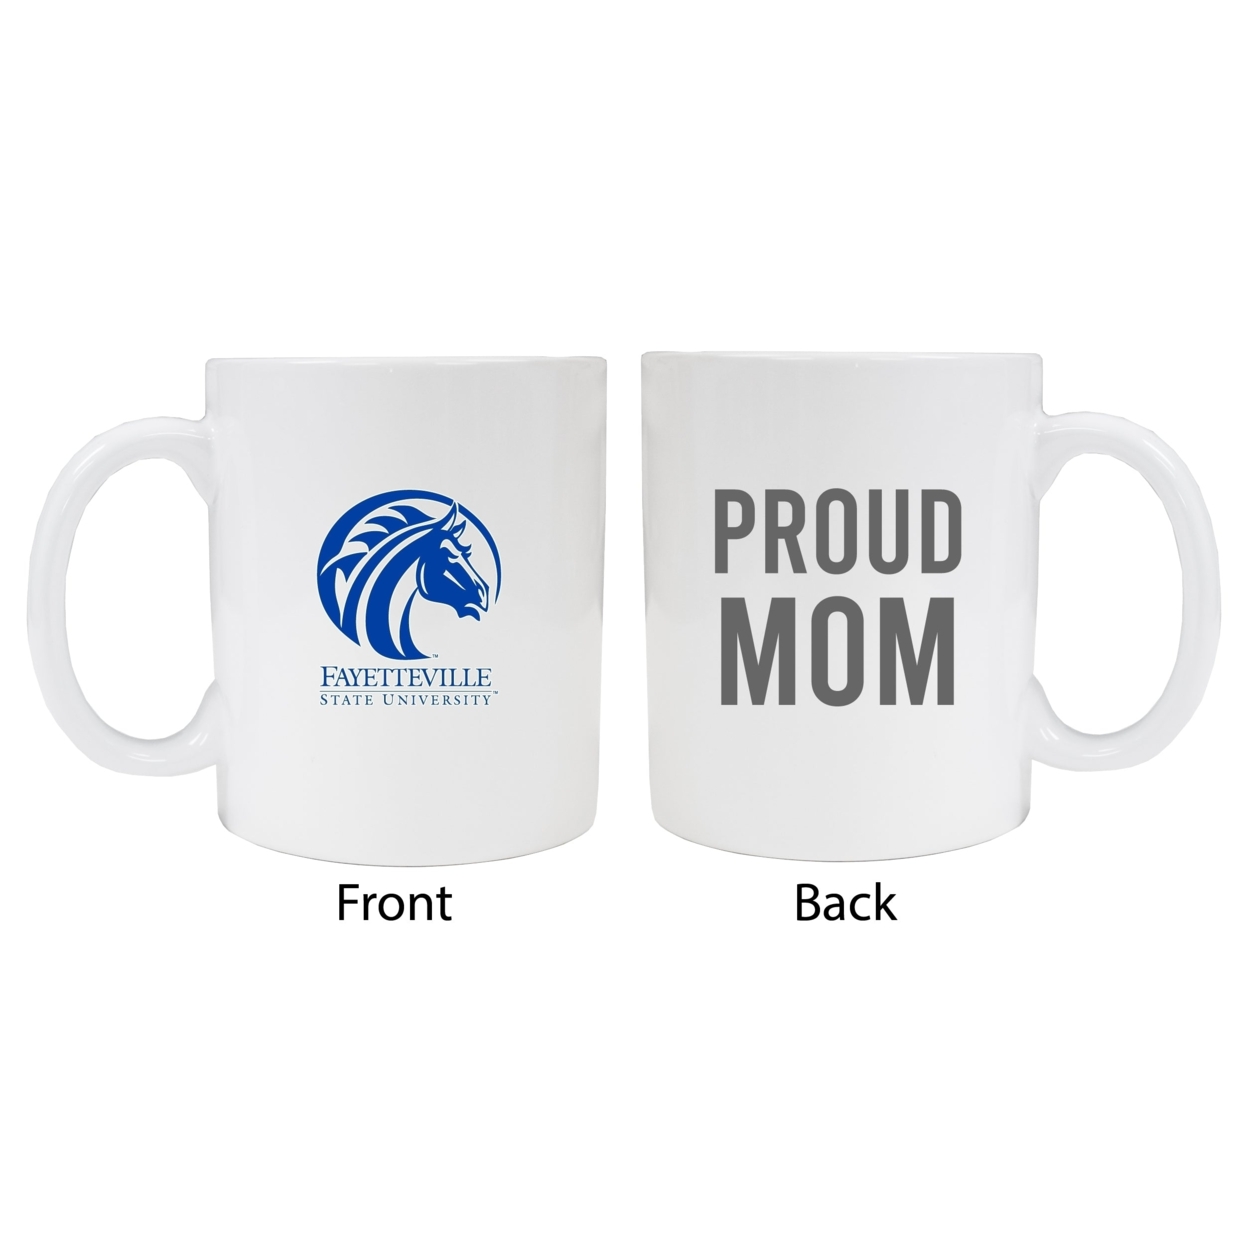 Fayetteville State University Proud Mom Ceramic Coffee Mug - White